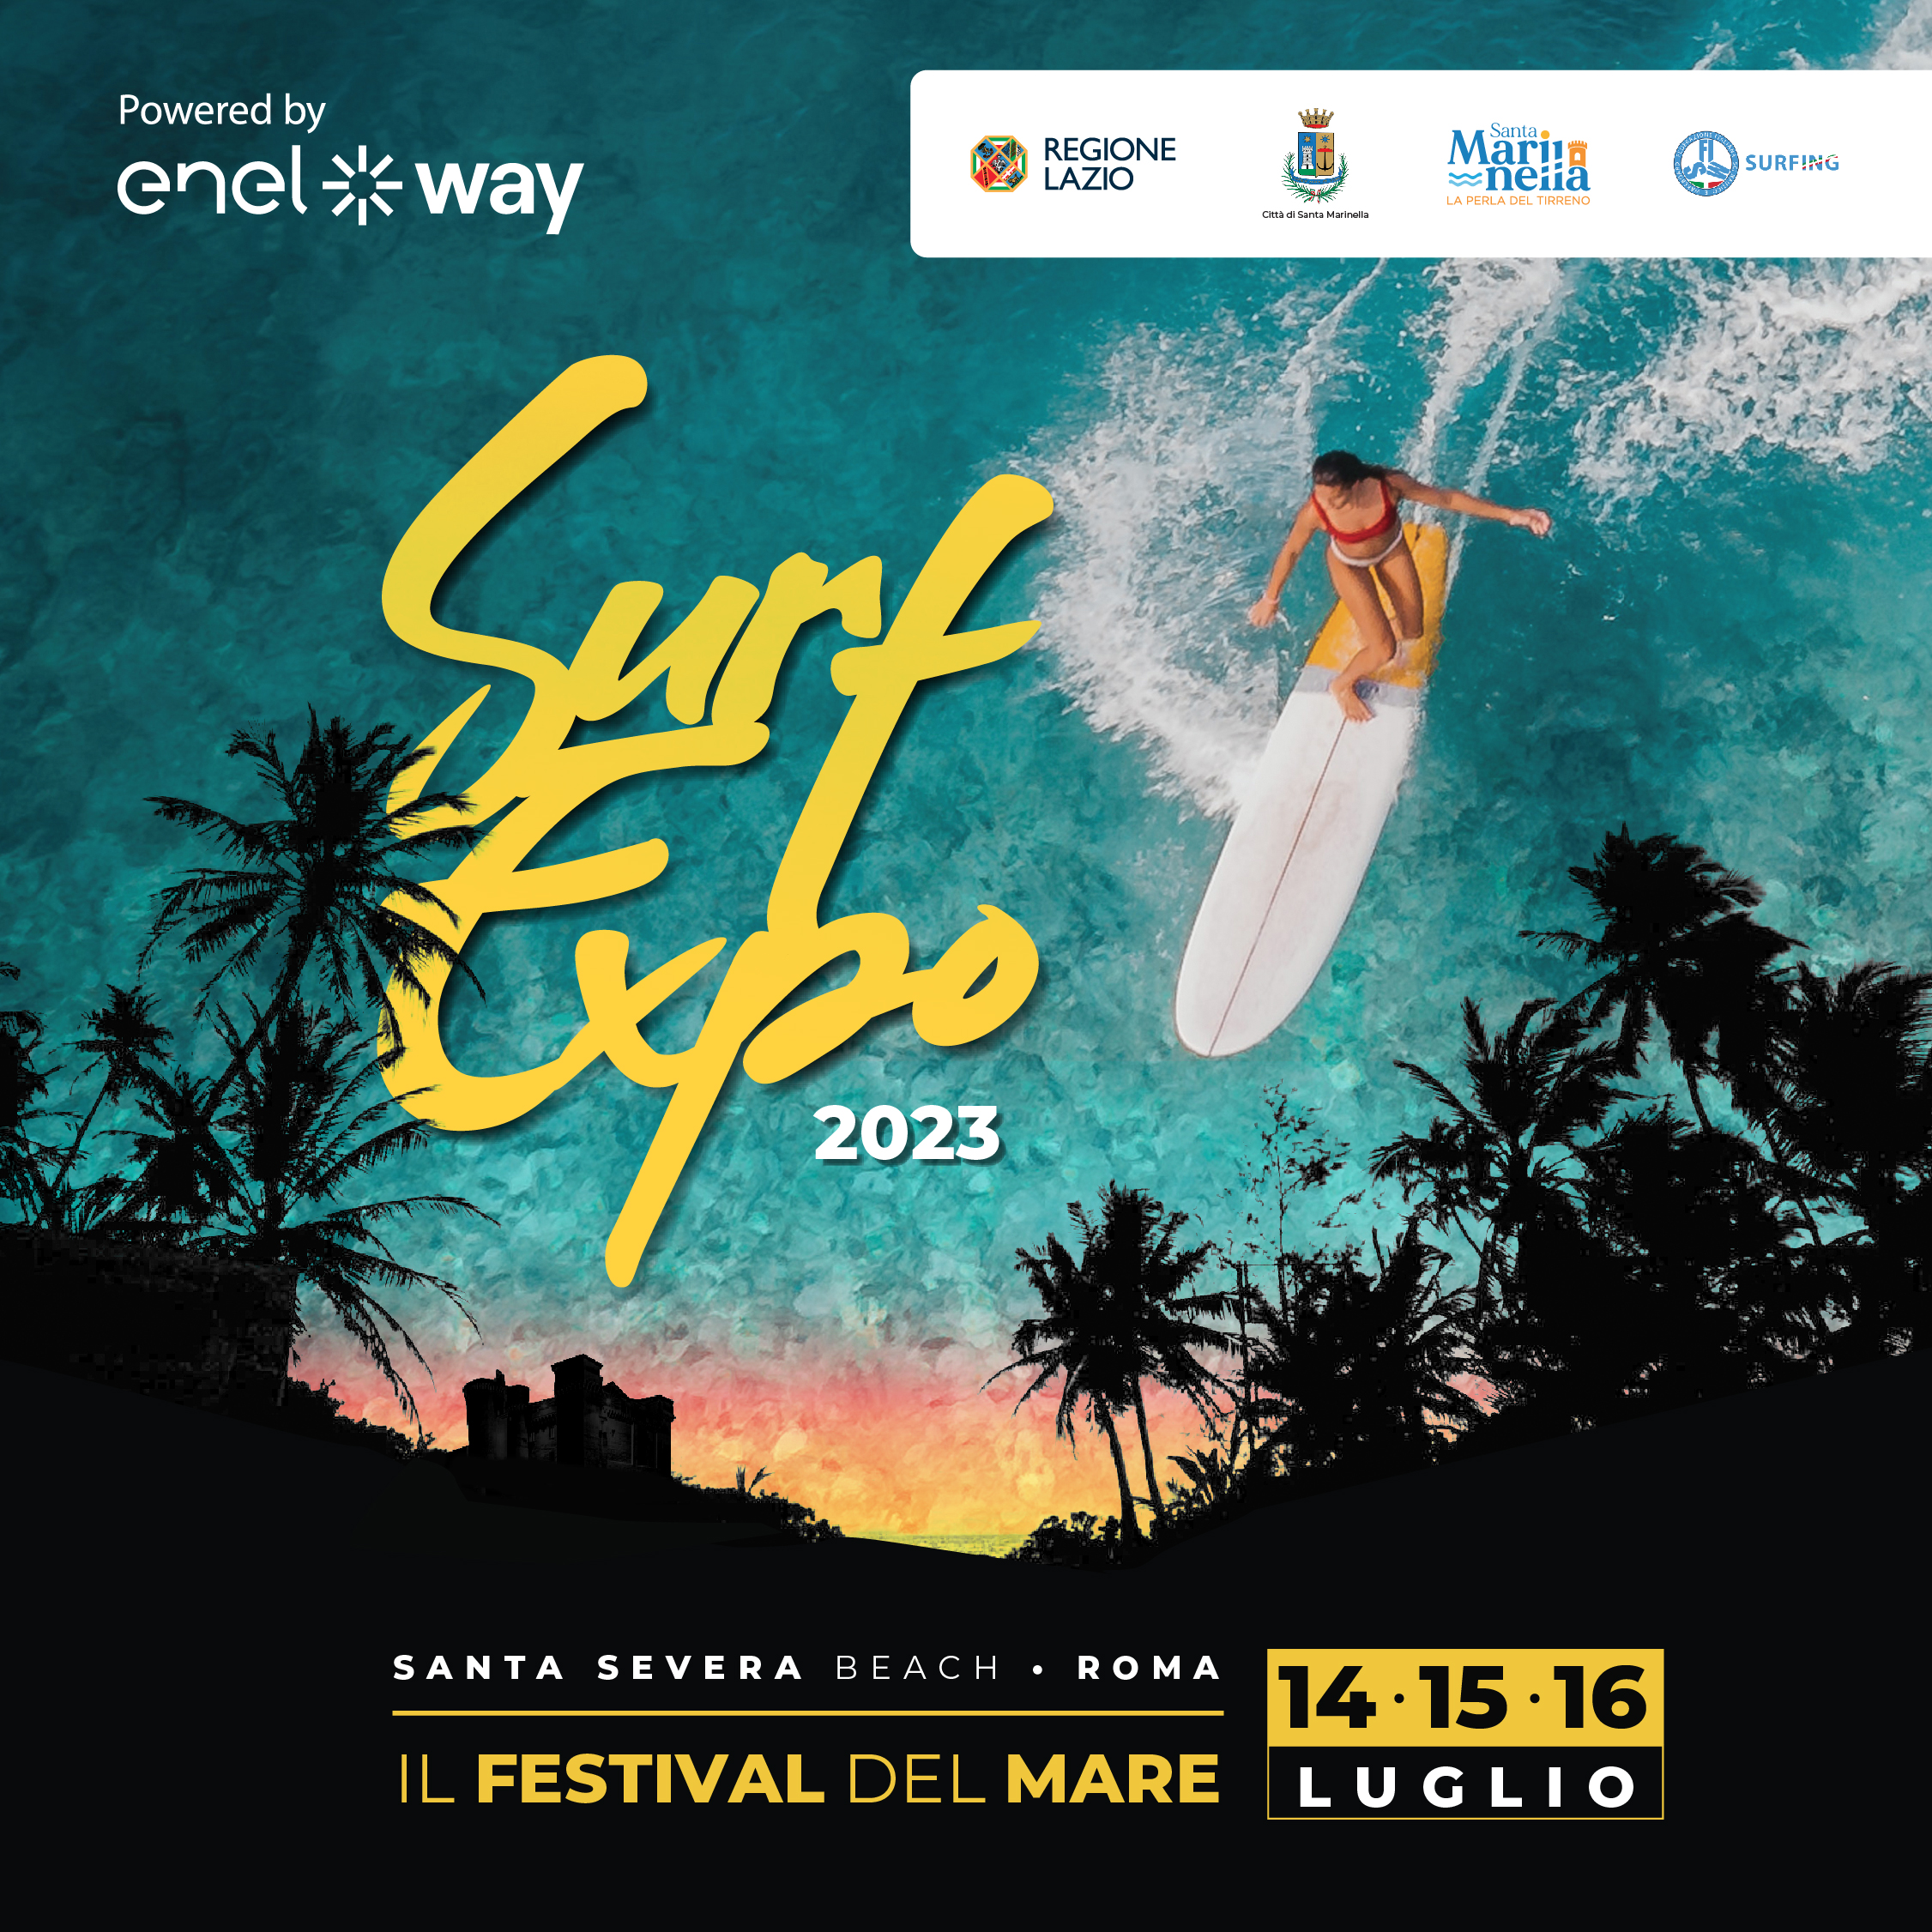 immagini-social-surf-expo-02